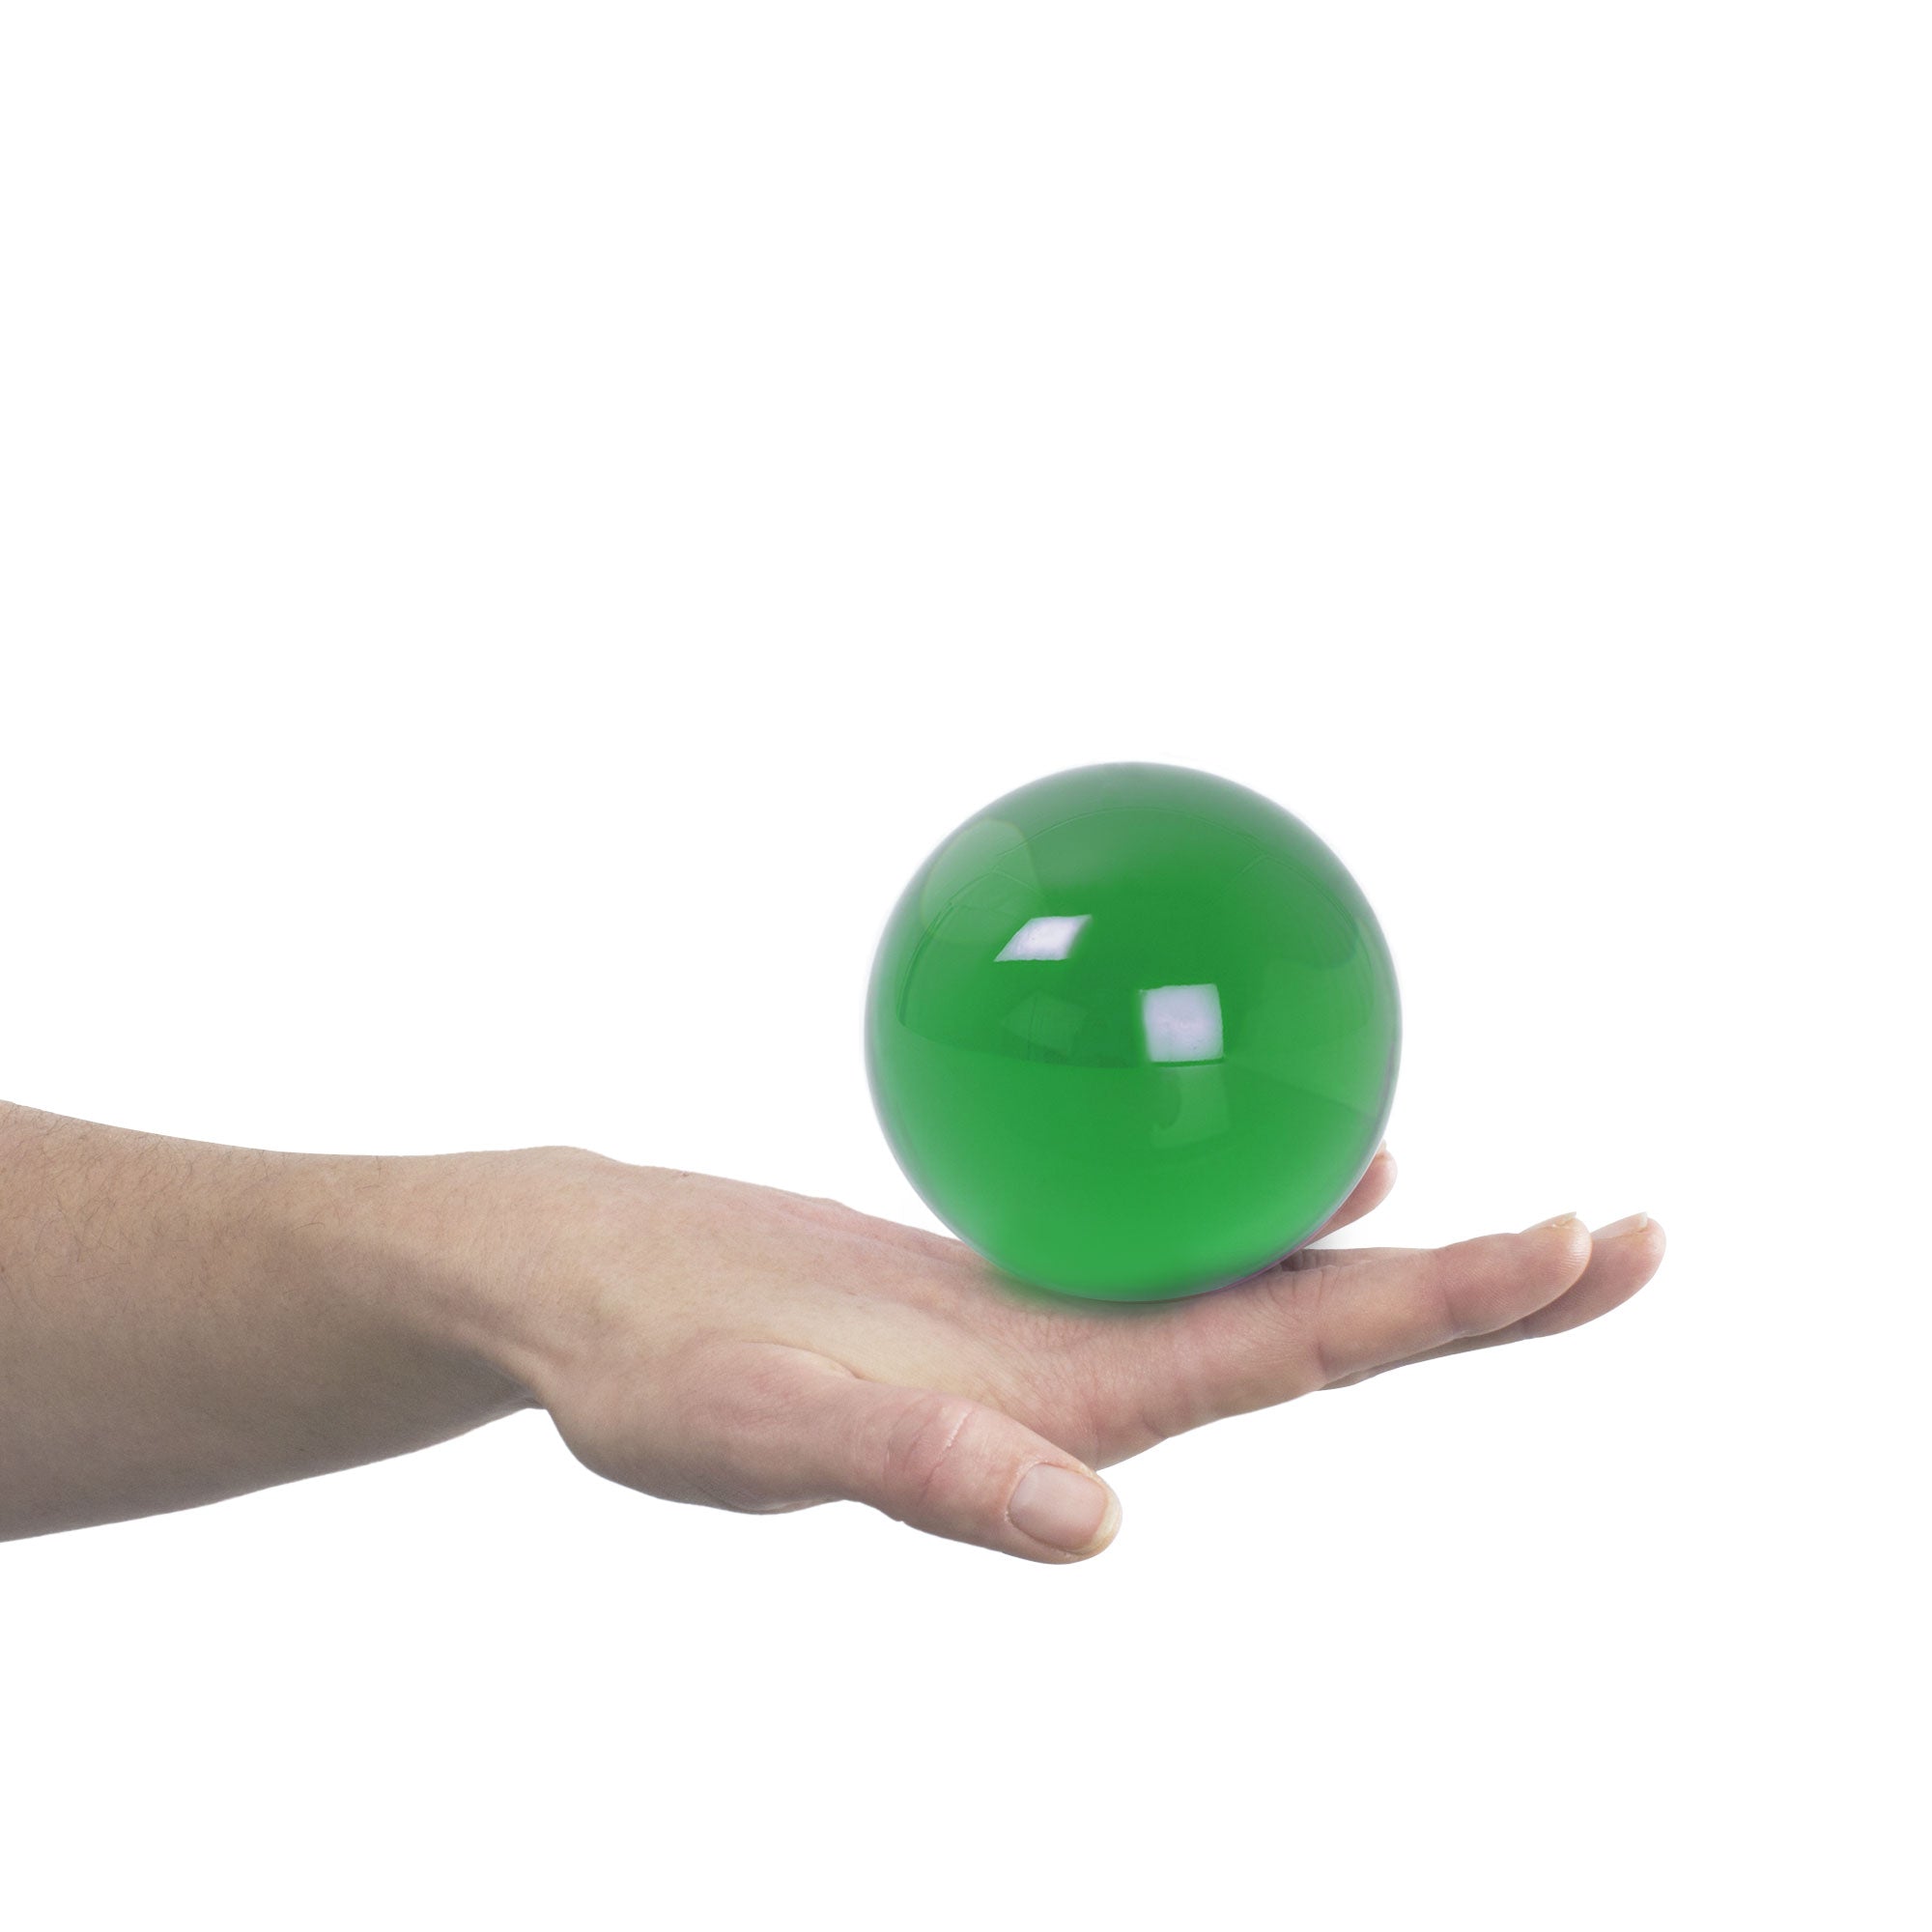 90mm green contact ball balanced on hand